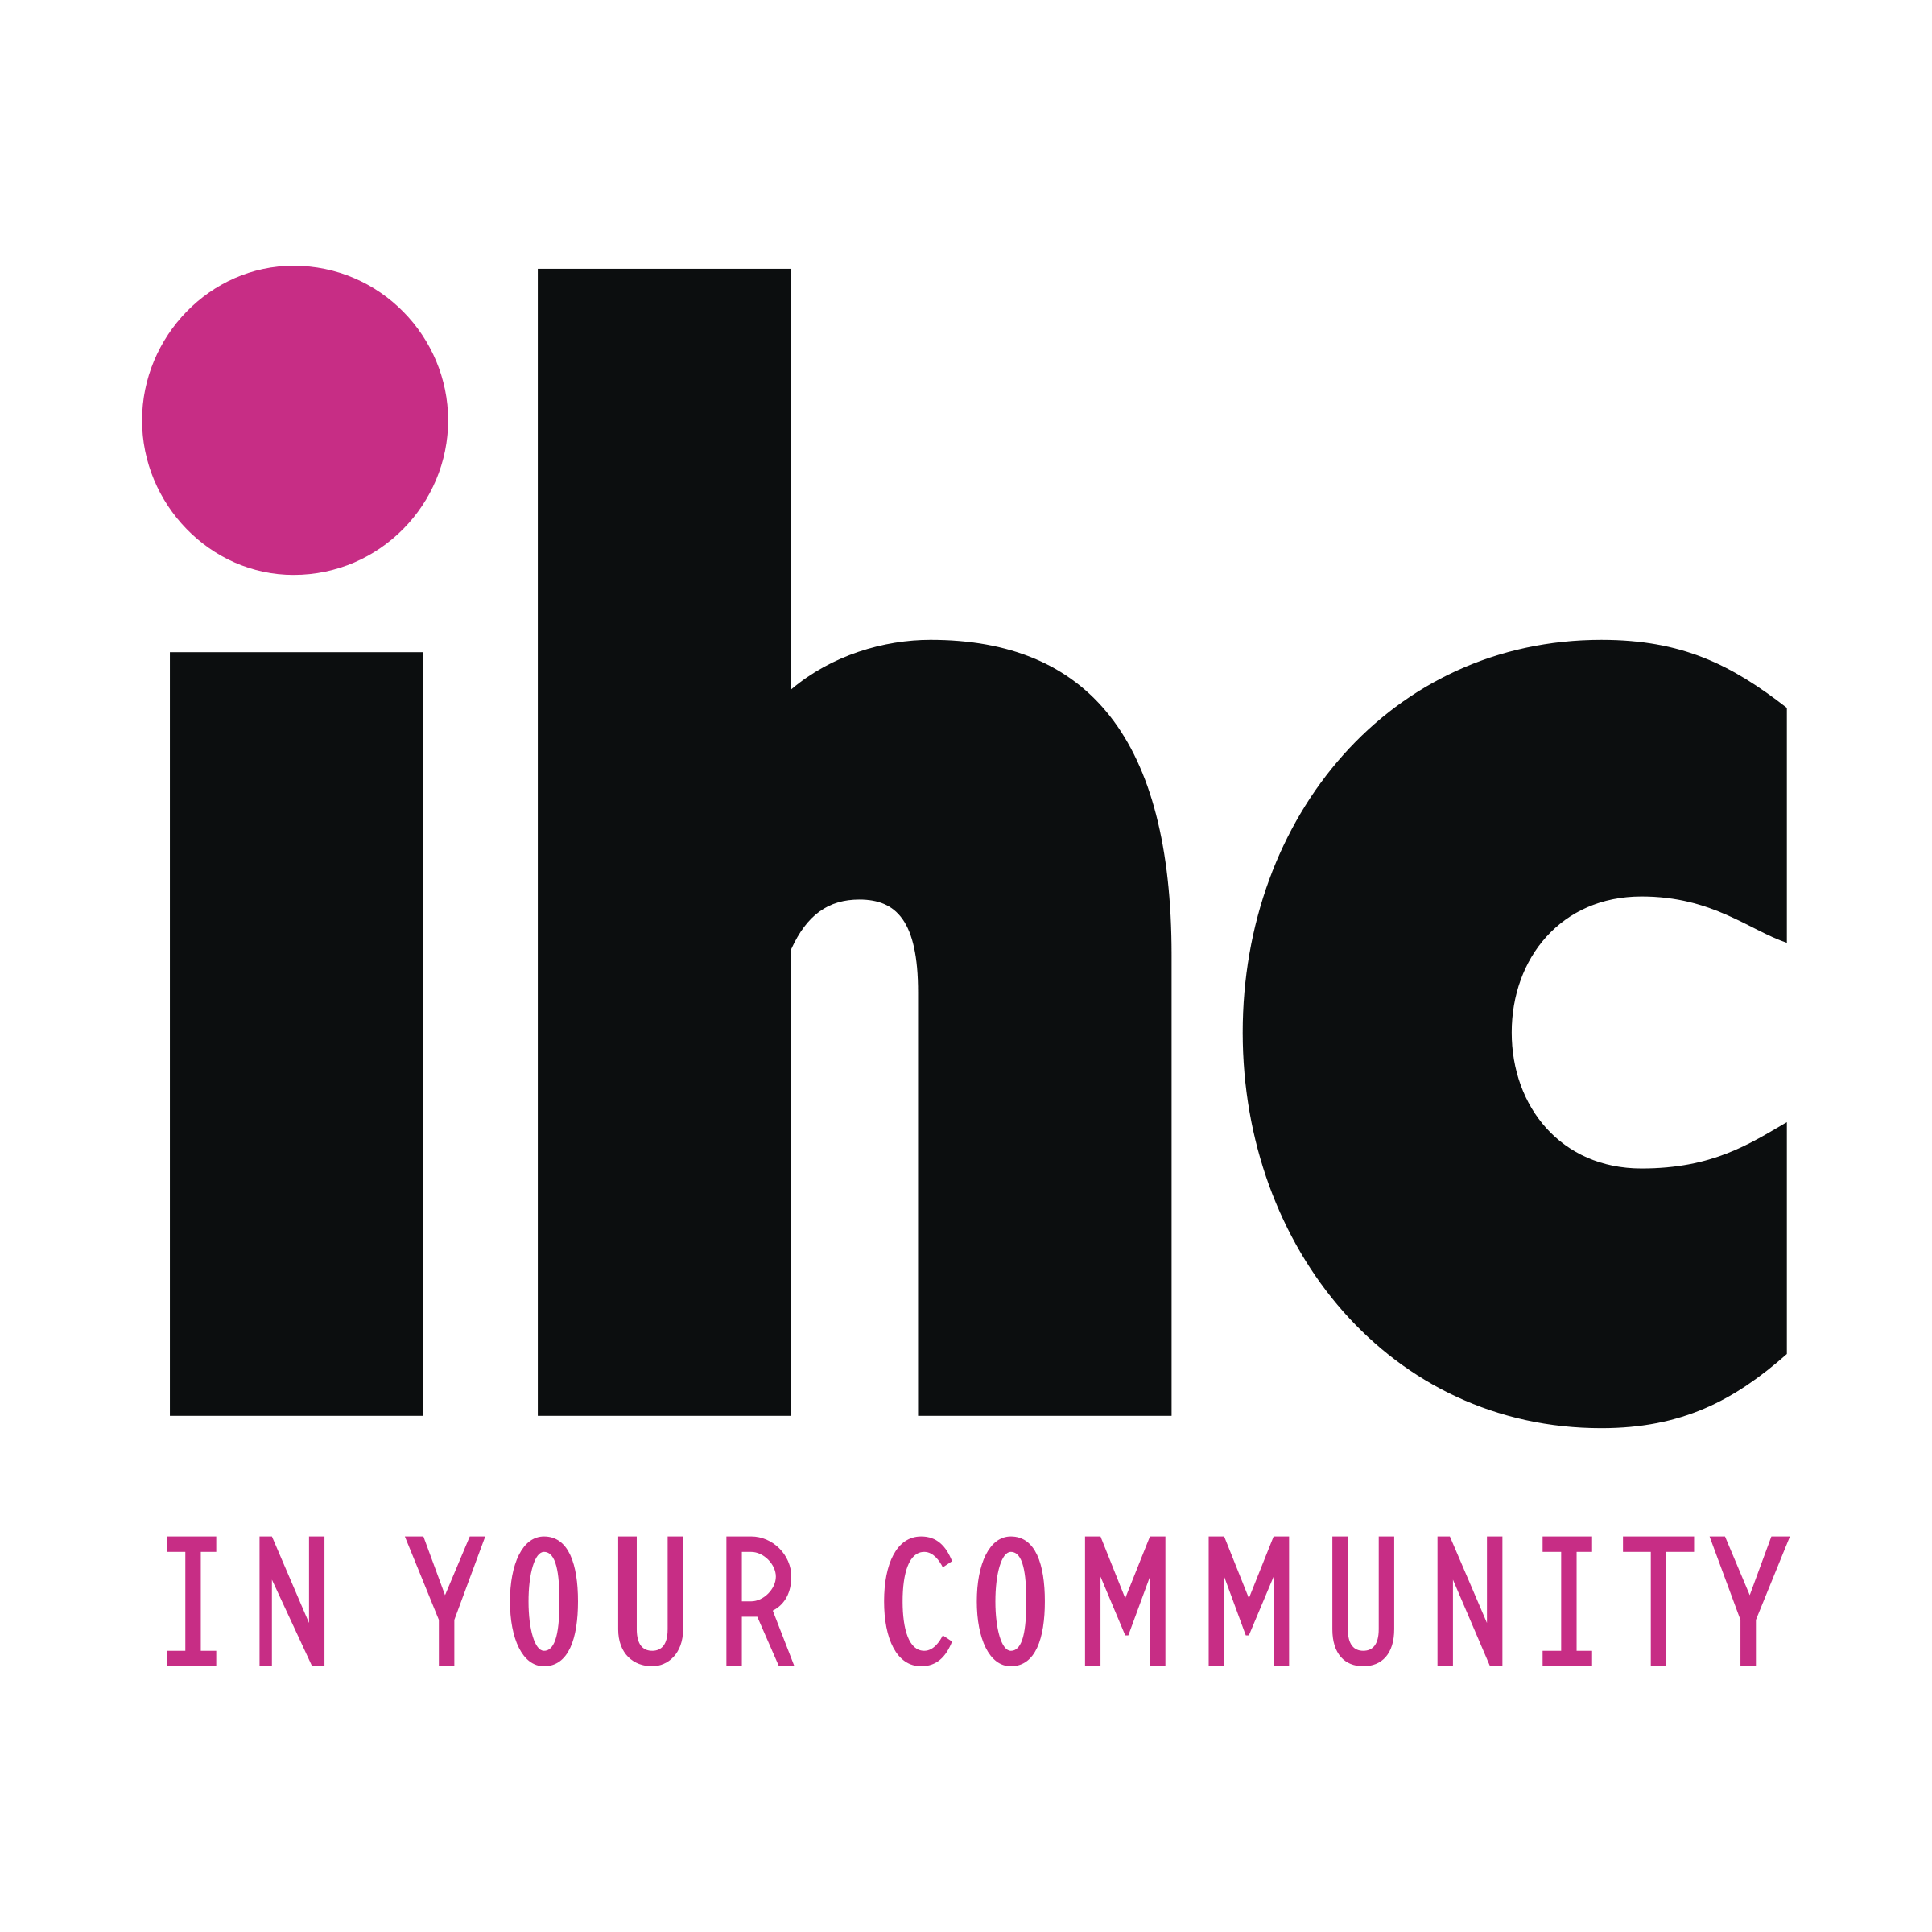 IHC Logo - IHC Logo PNG Transparent & SVG Vector - Freebie Supply